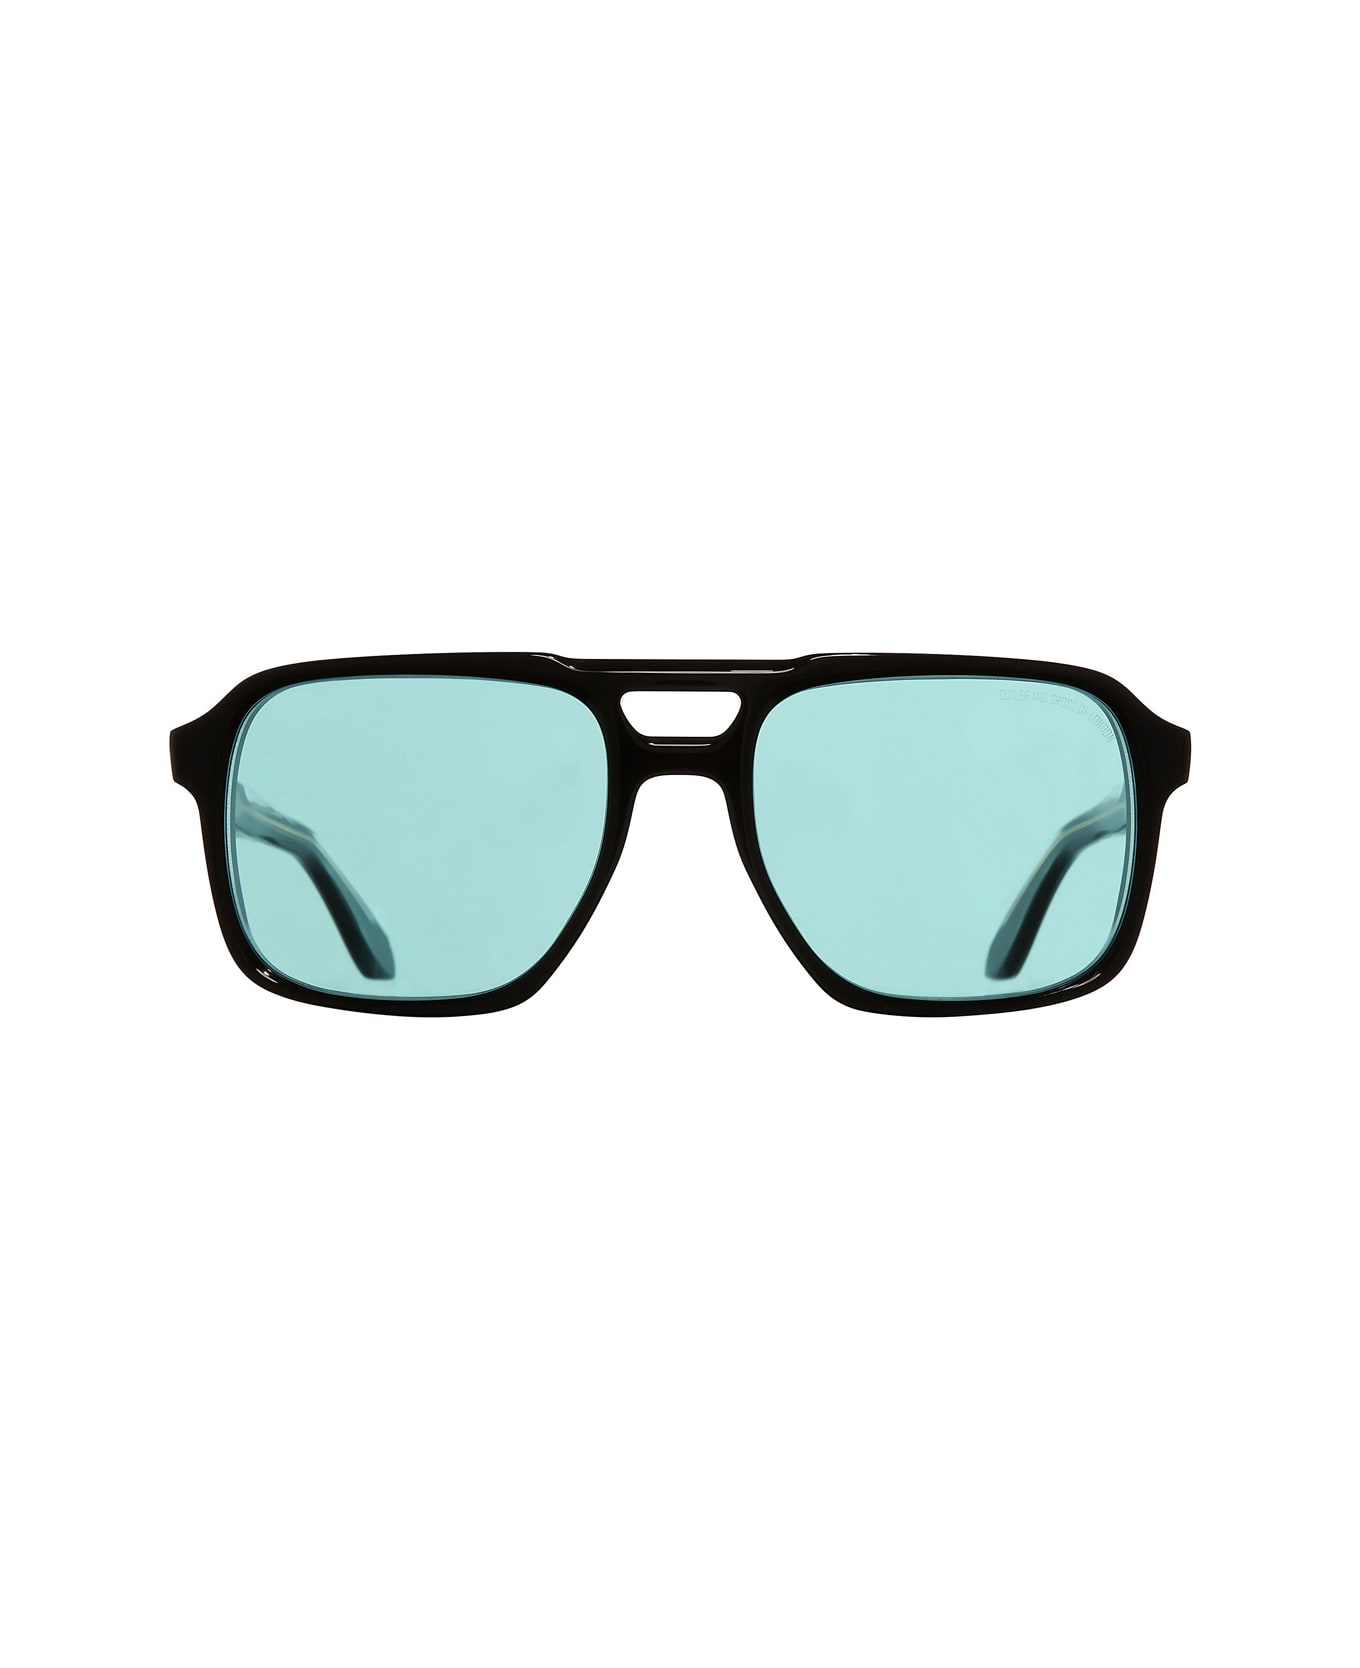 Cutler and Gross 1394 01 Sunglasses - Nero